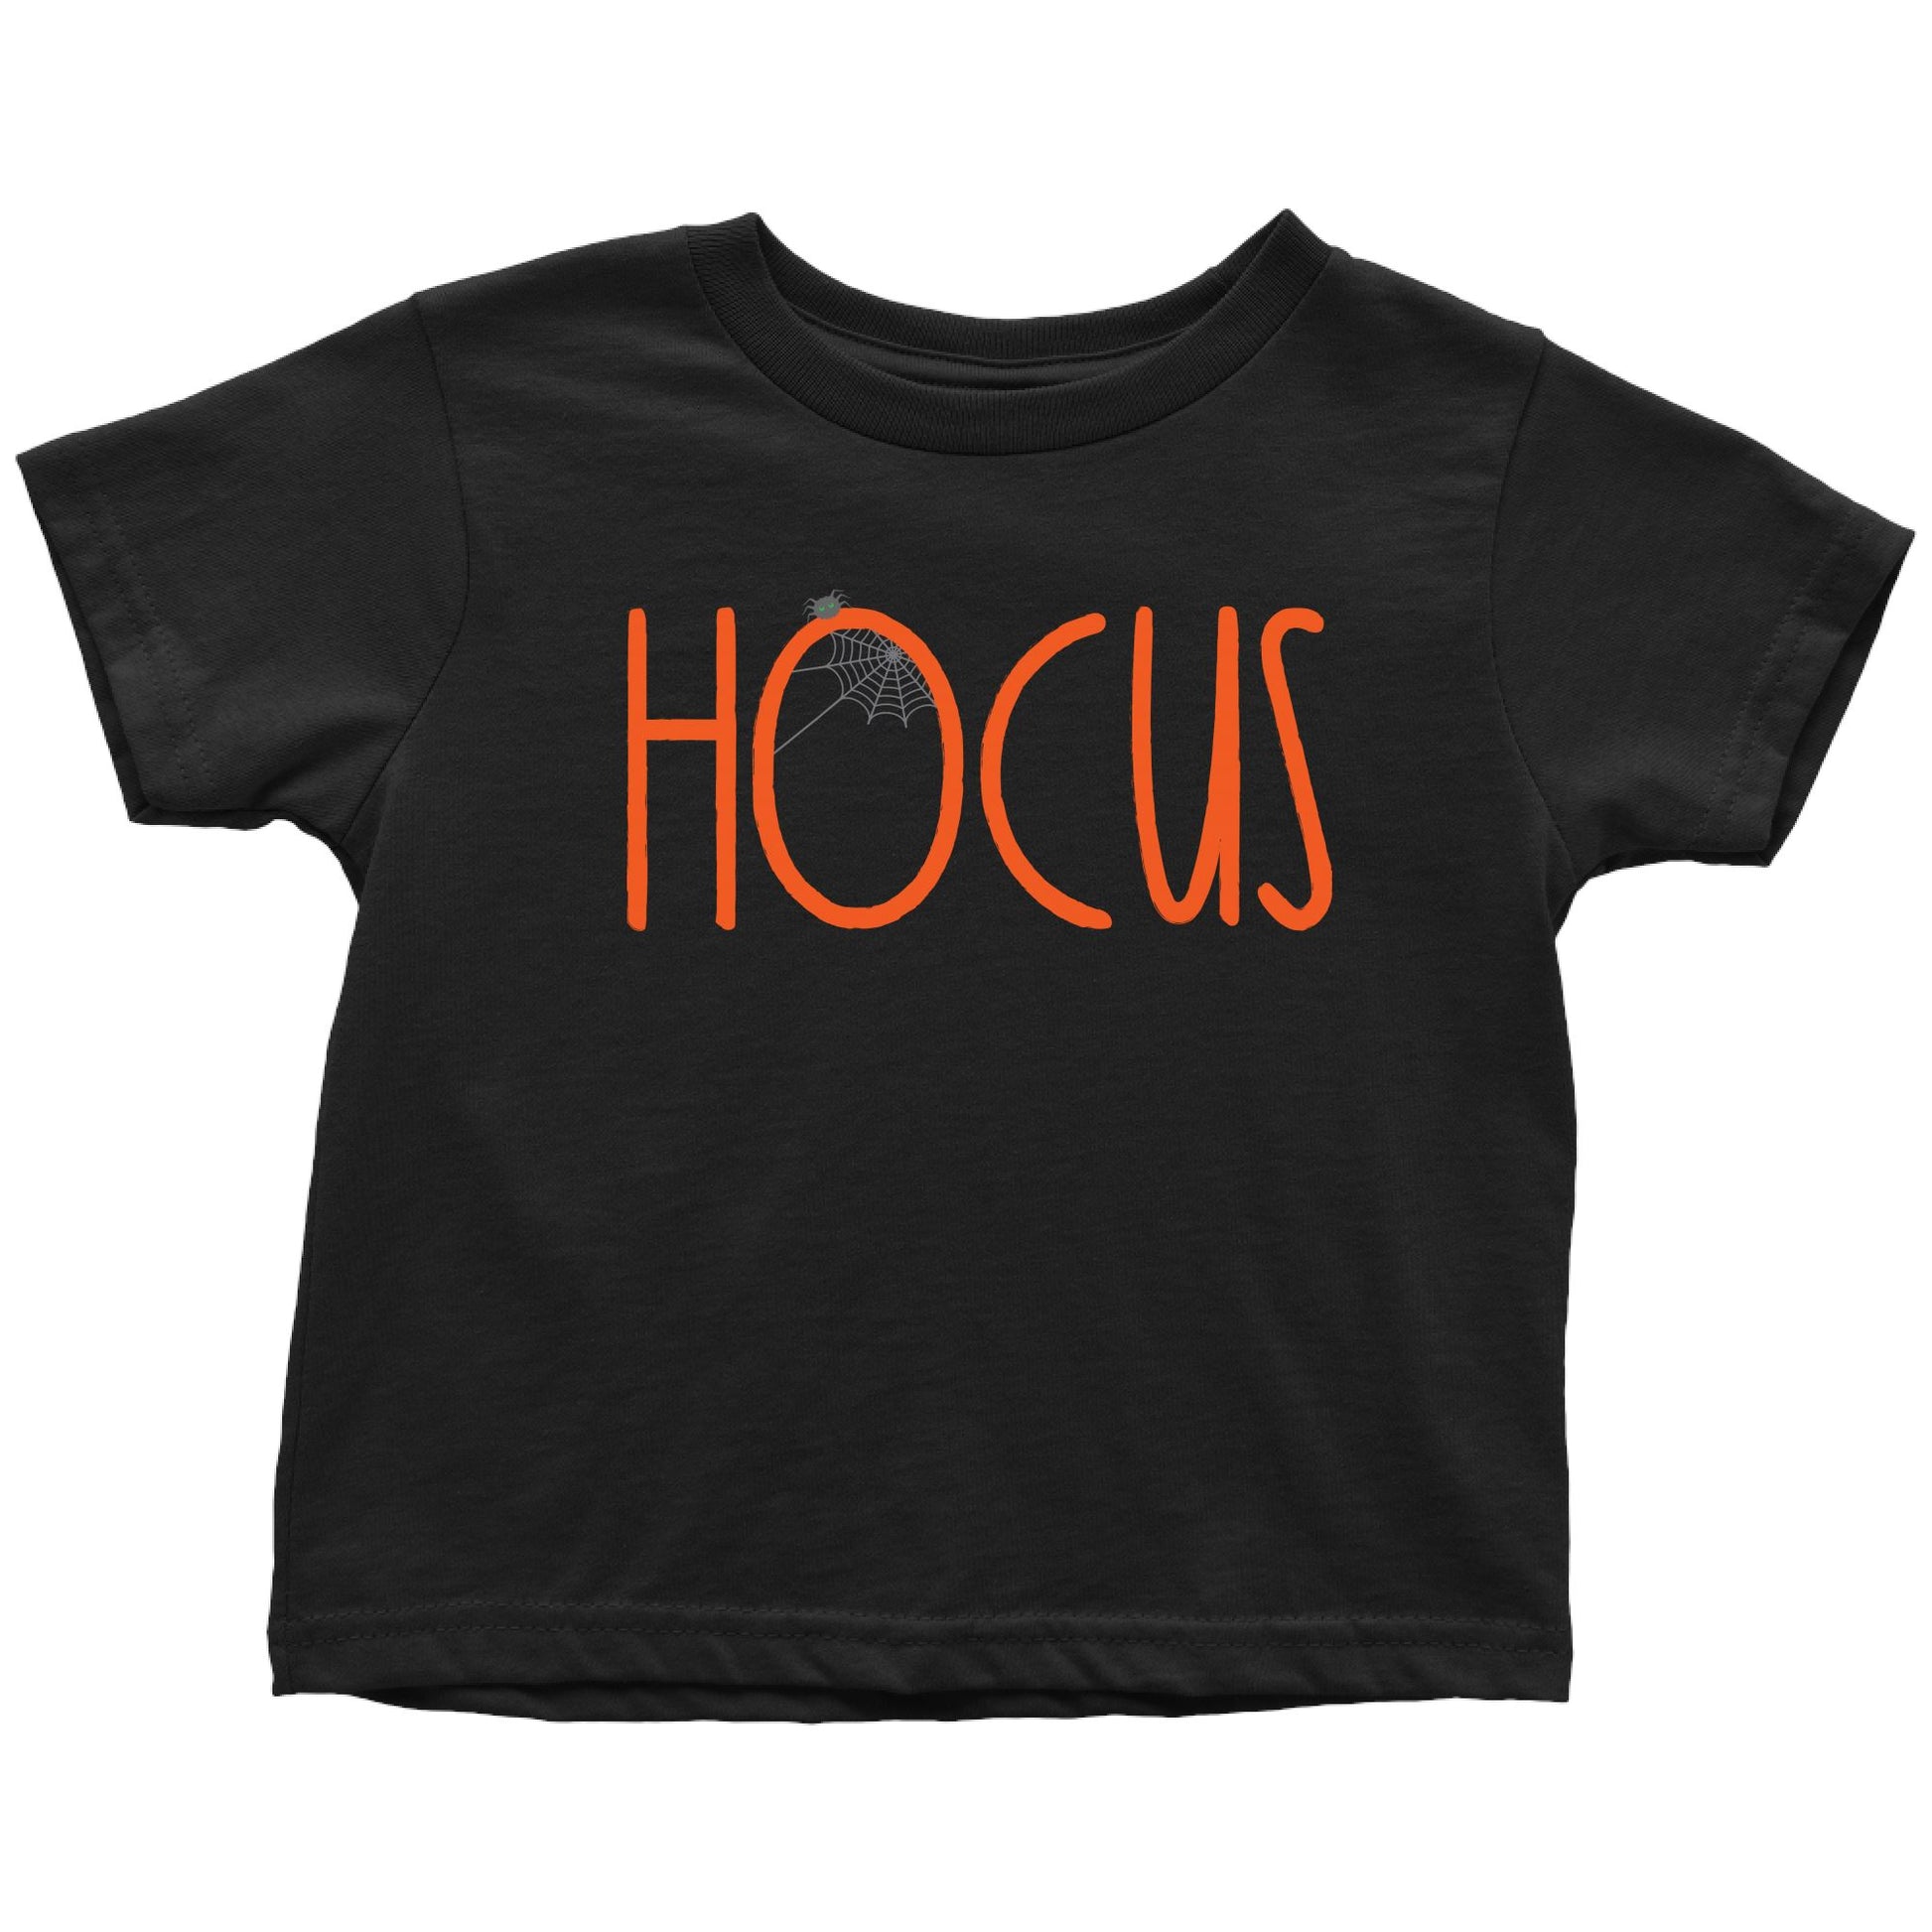 Hocus Pocus Sibling Shirts